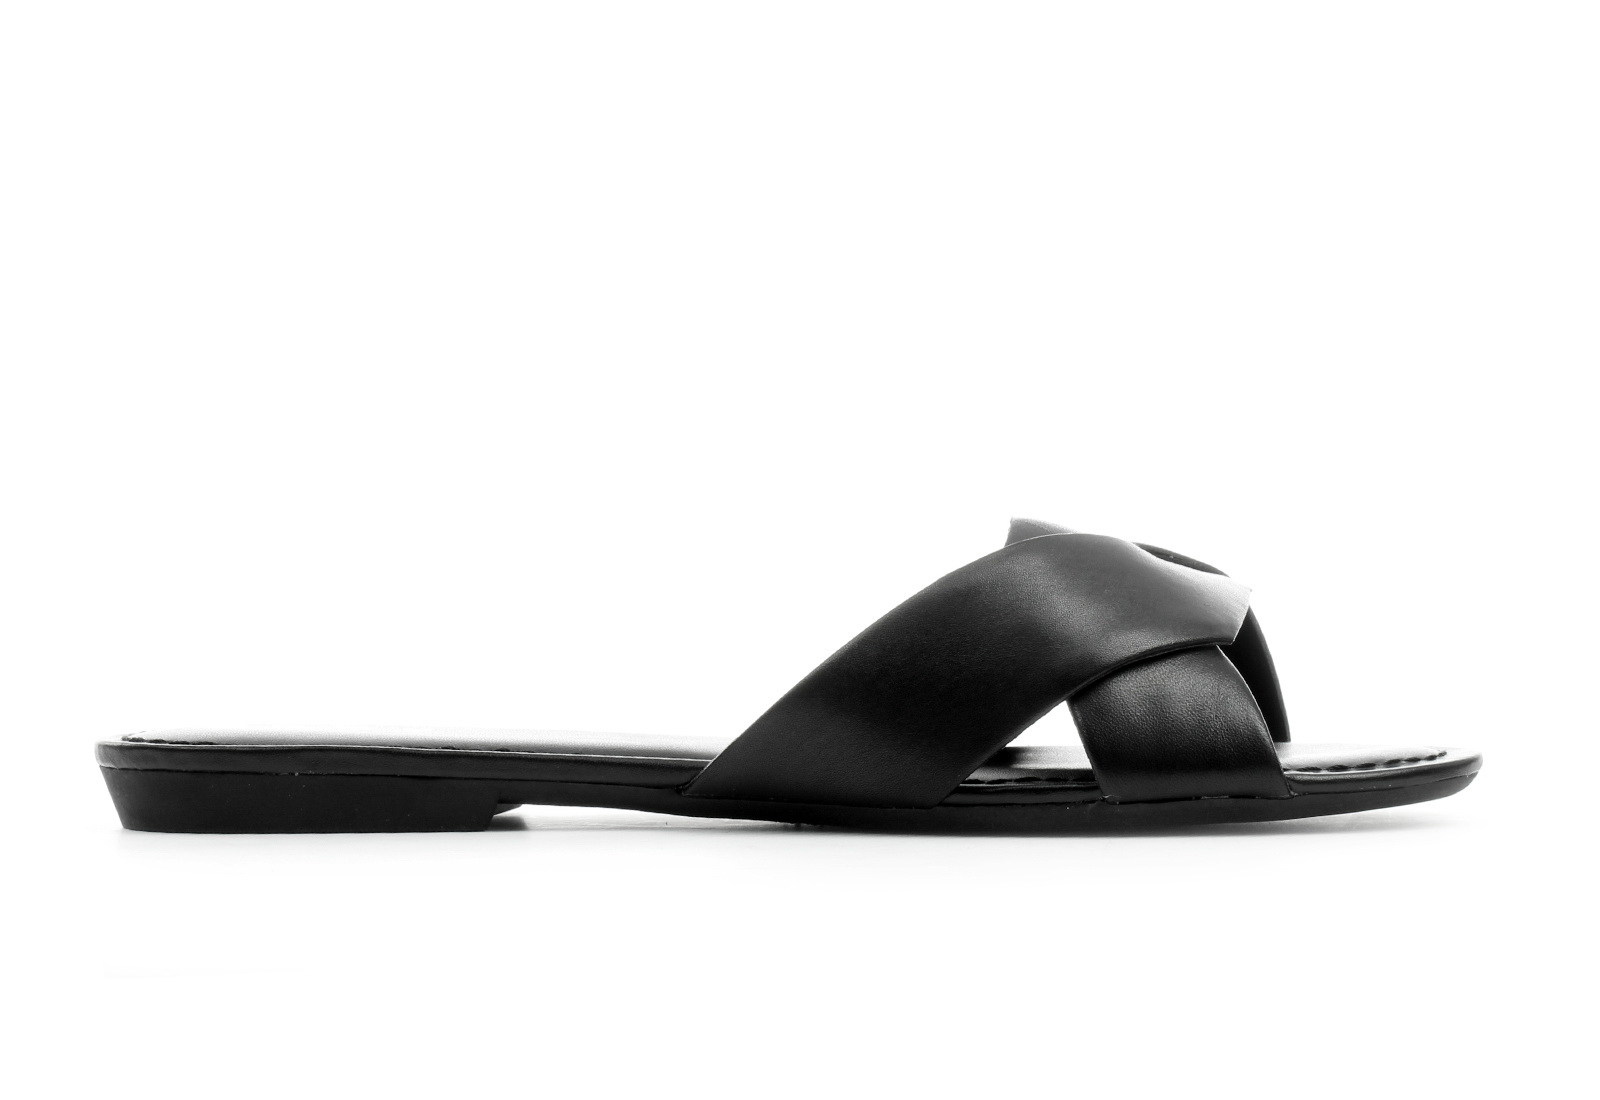 DKNY Womens Kiara Open Toe Casual Slide Sandals, Black, Size 8.5 | eBay